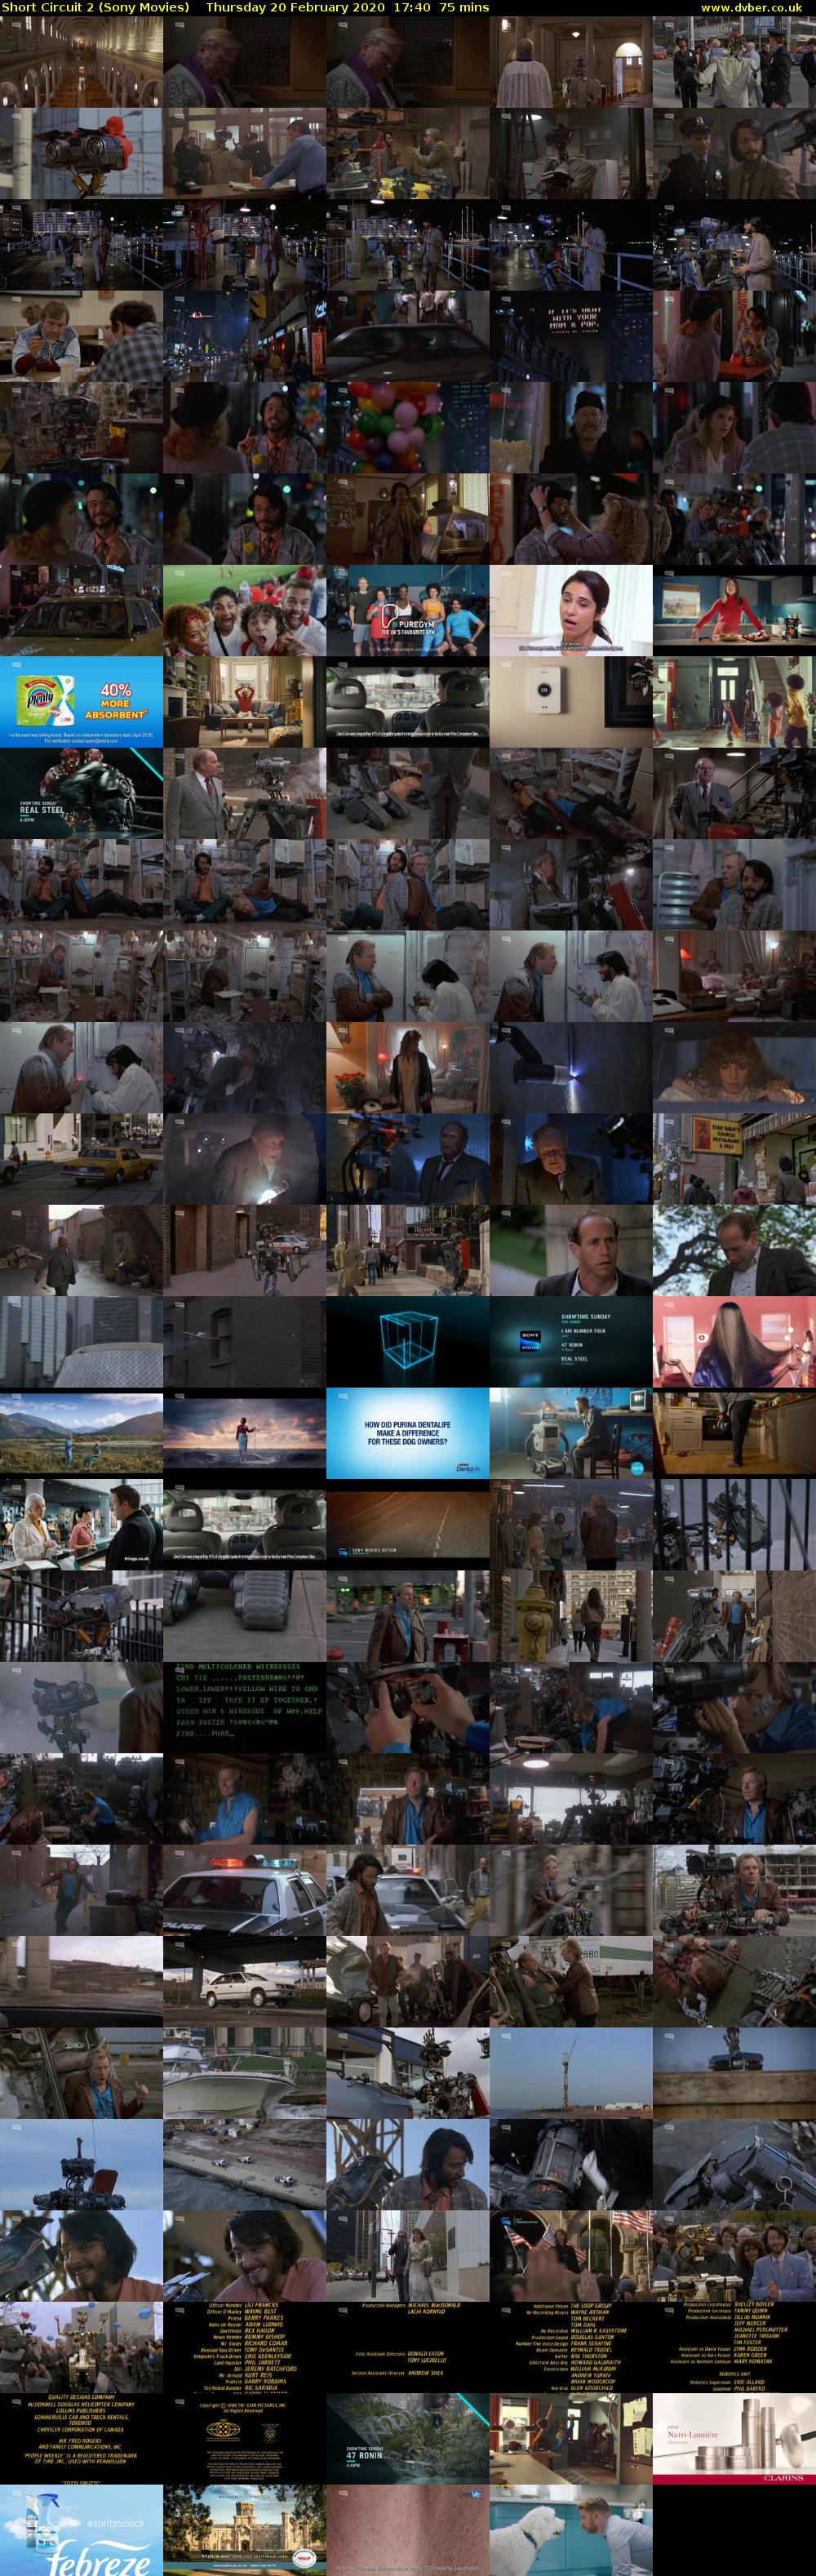 Short Circuit 2 (Sony Movies) Thursday 20 February 2020 17:40 - 18:55